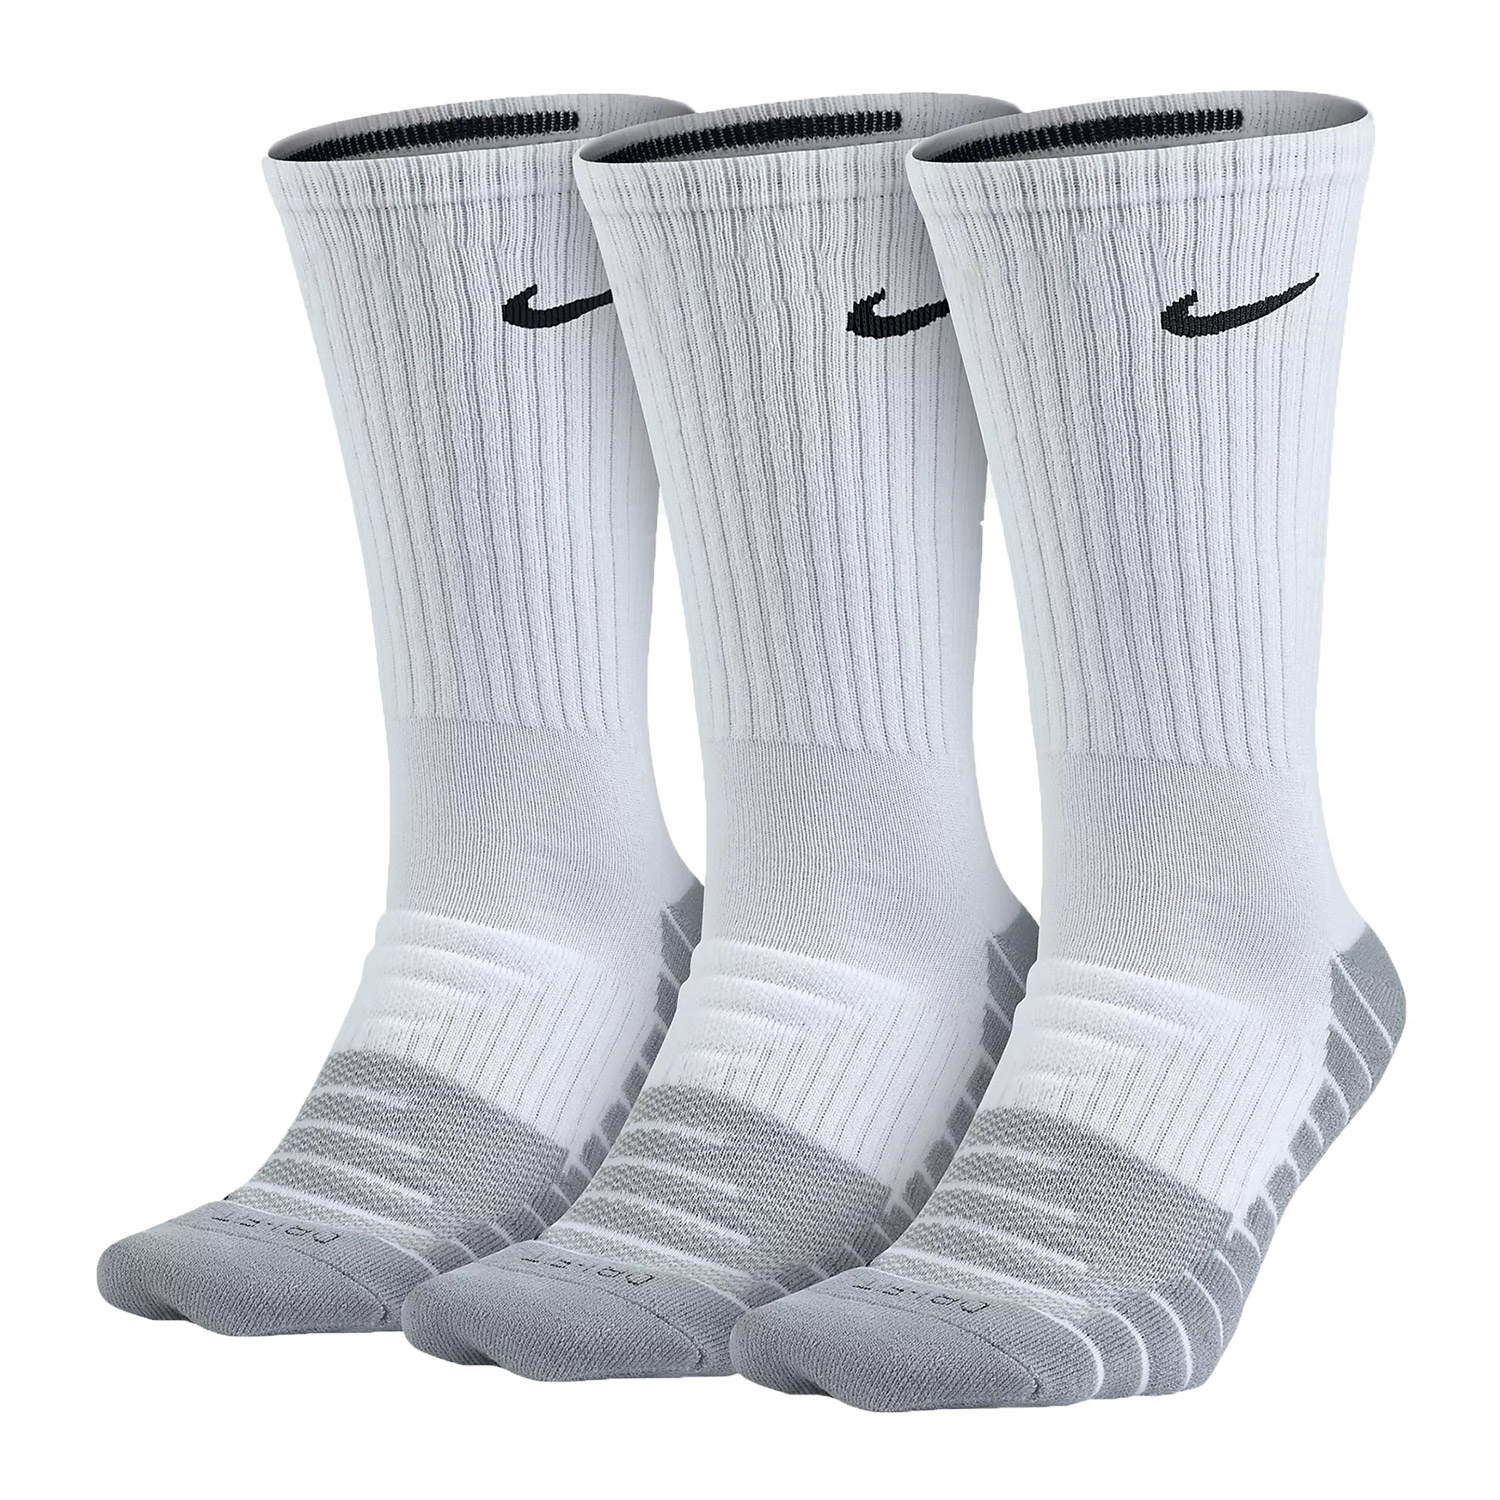 Nike Dry Cushion Crew x 3 Socks - White/Grey